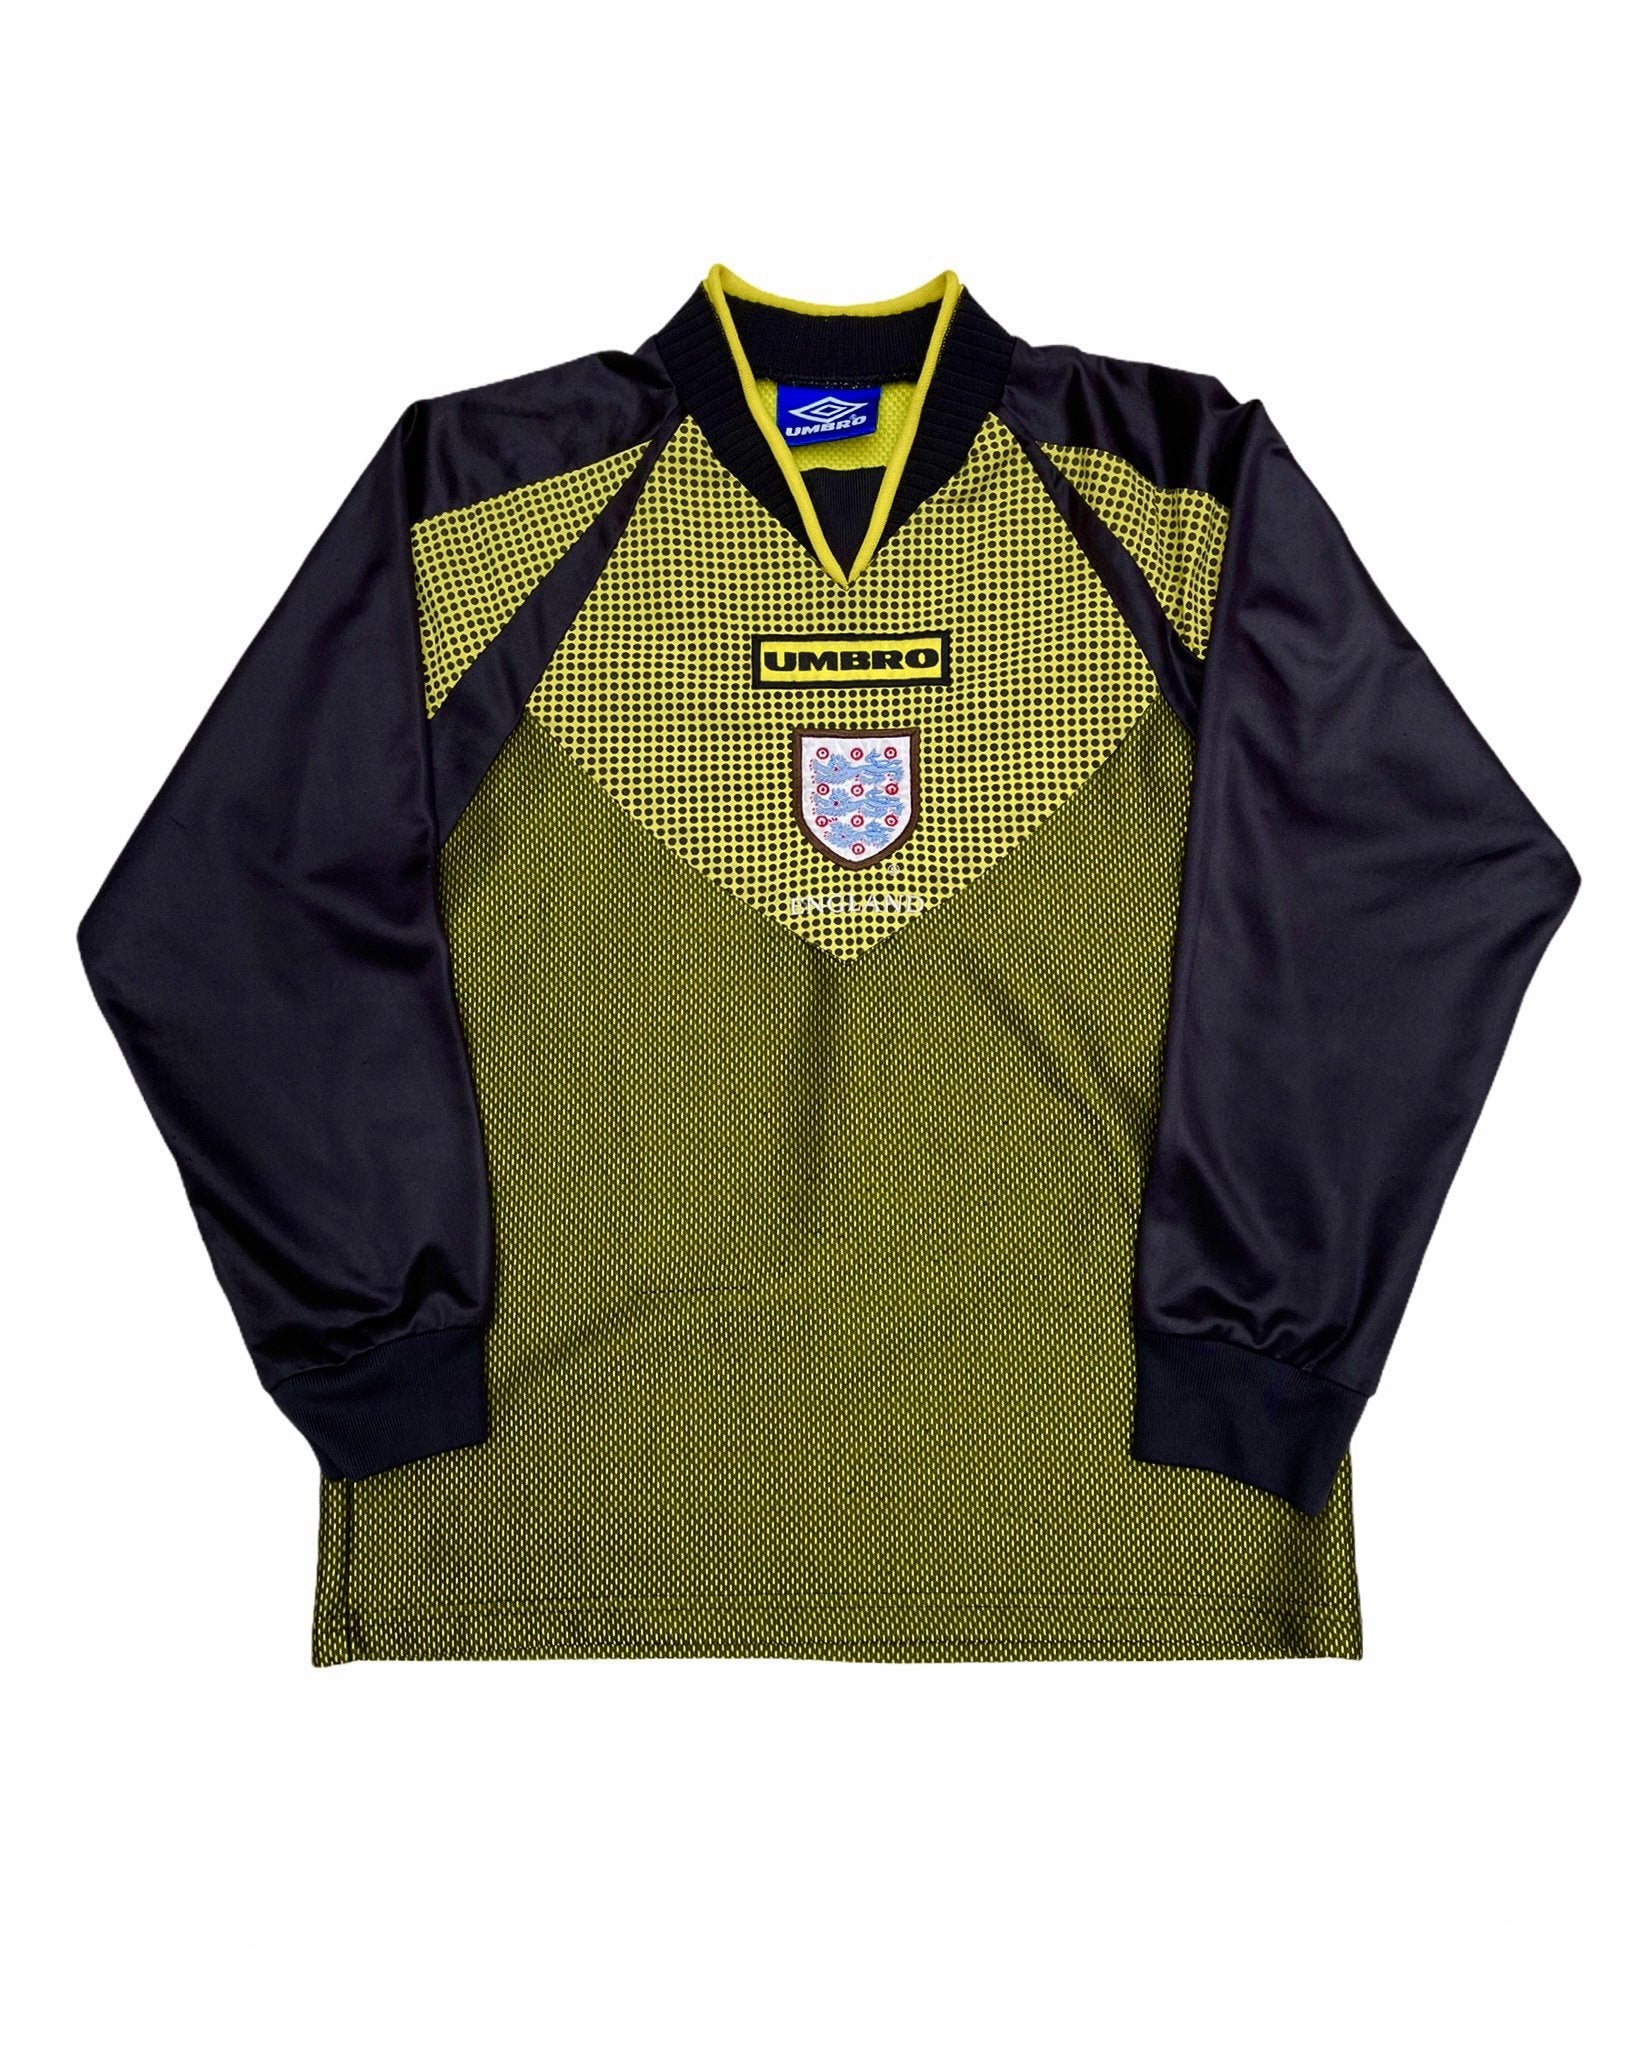  Maillot de football Umbro Maillot de gardien - England 98' 99' - XS - PLOMOSTORE